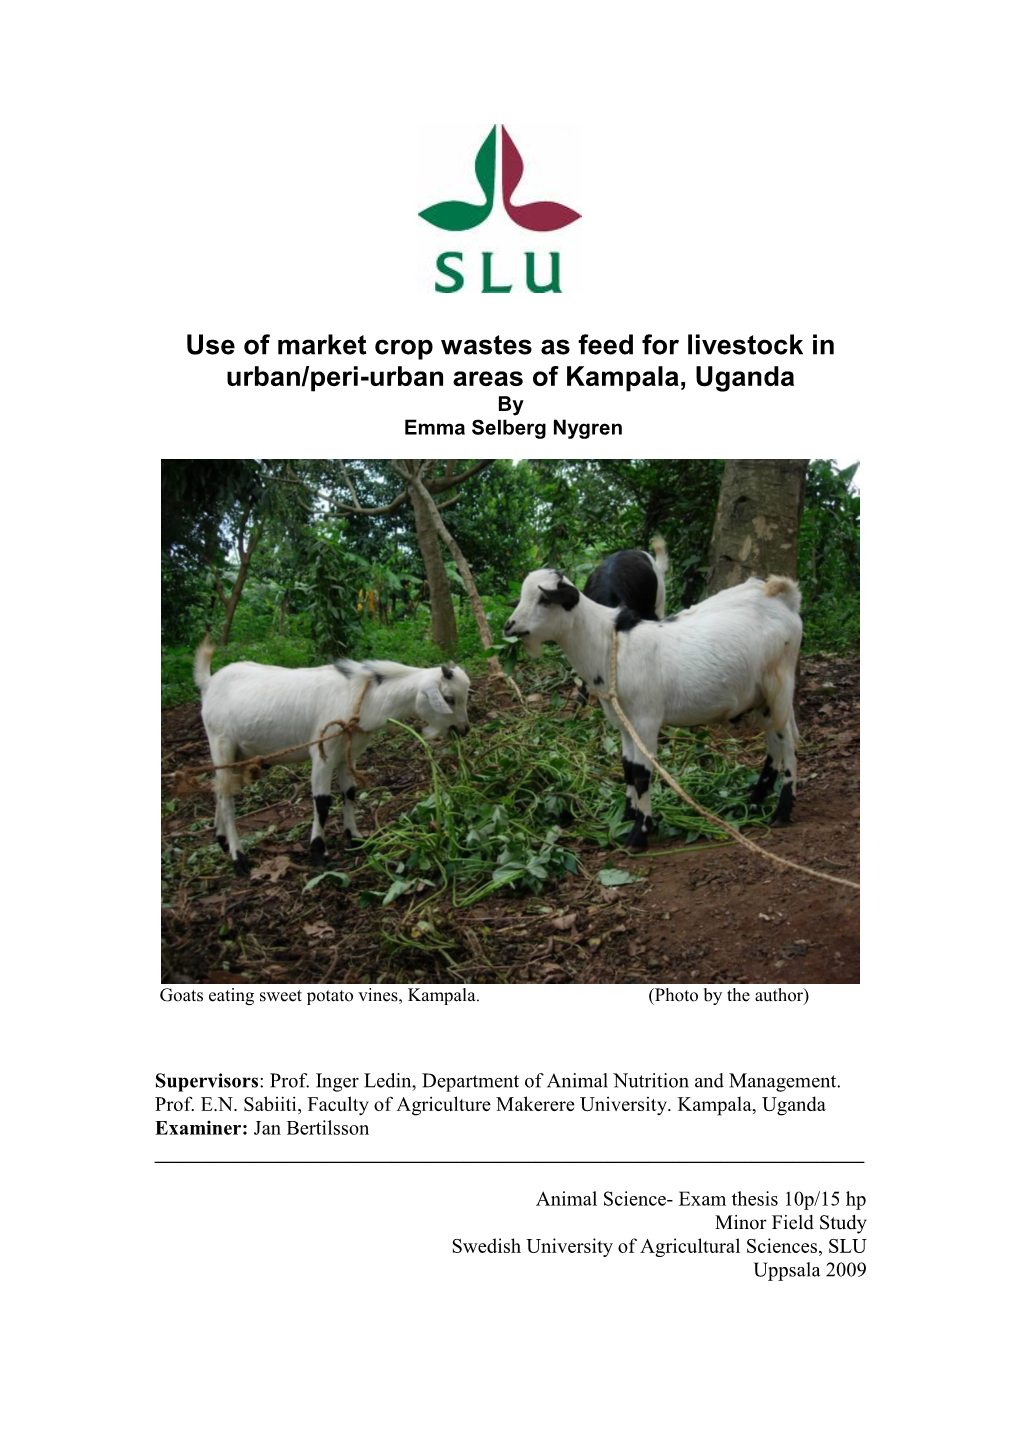 Use of Market Crop Wastes As Feed for Livestock in Urban/Peri-Urban Areas of Kampala, Uganda by Emma Selberg Nygren